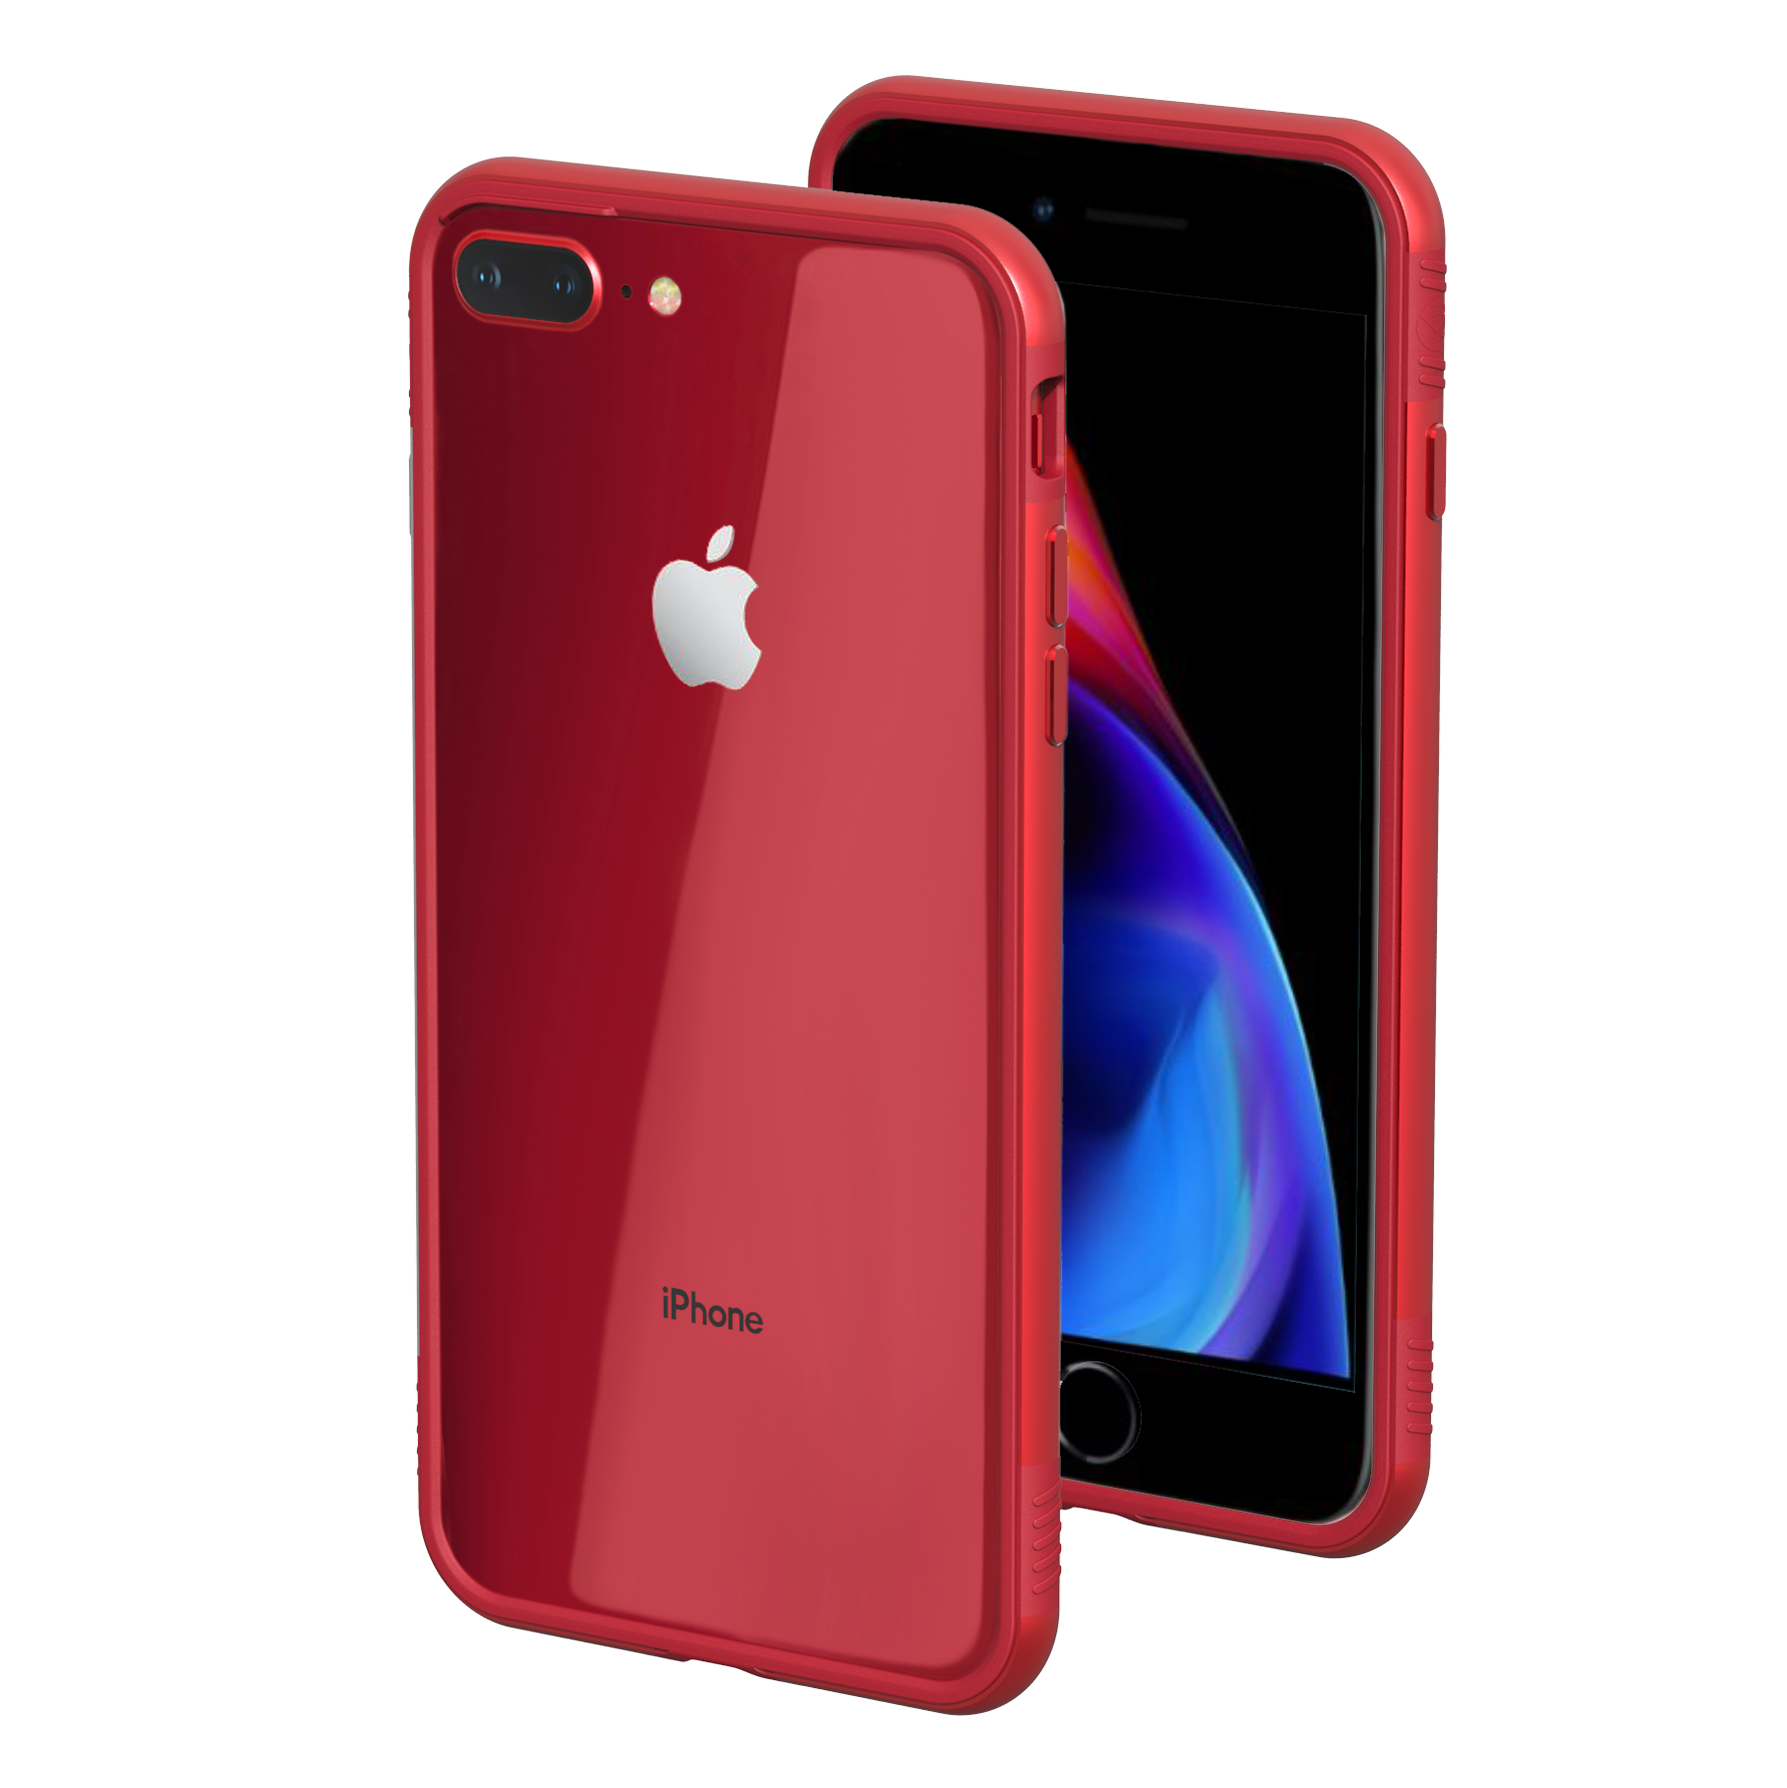 Apple iphone 8 Plus. Apple iphone 8 Plus красный. Iphone 8 Plus PNG. Iphone 8 Plus 128gb красный. Apple iphone плюс